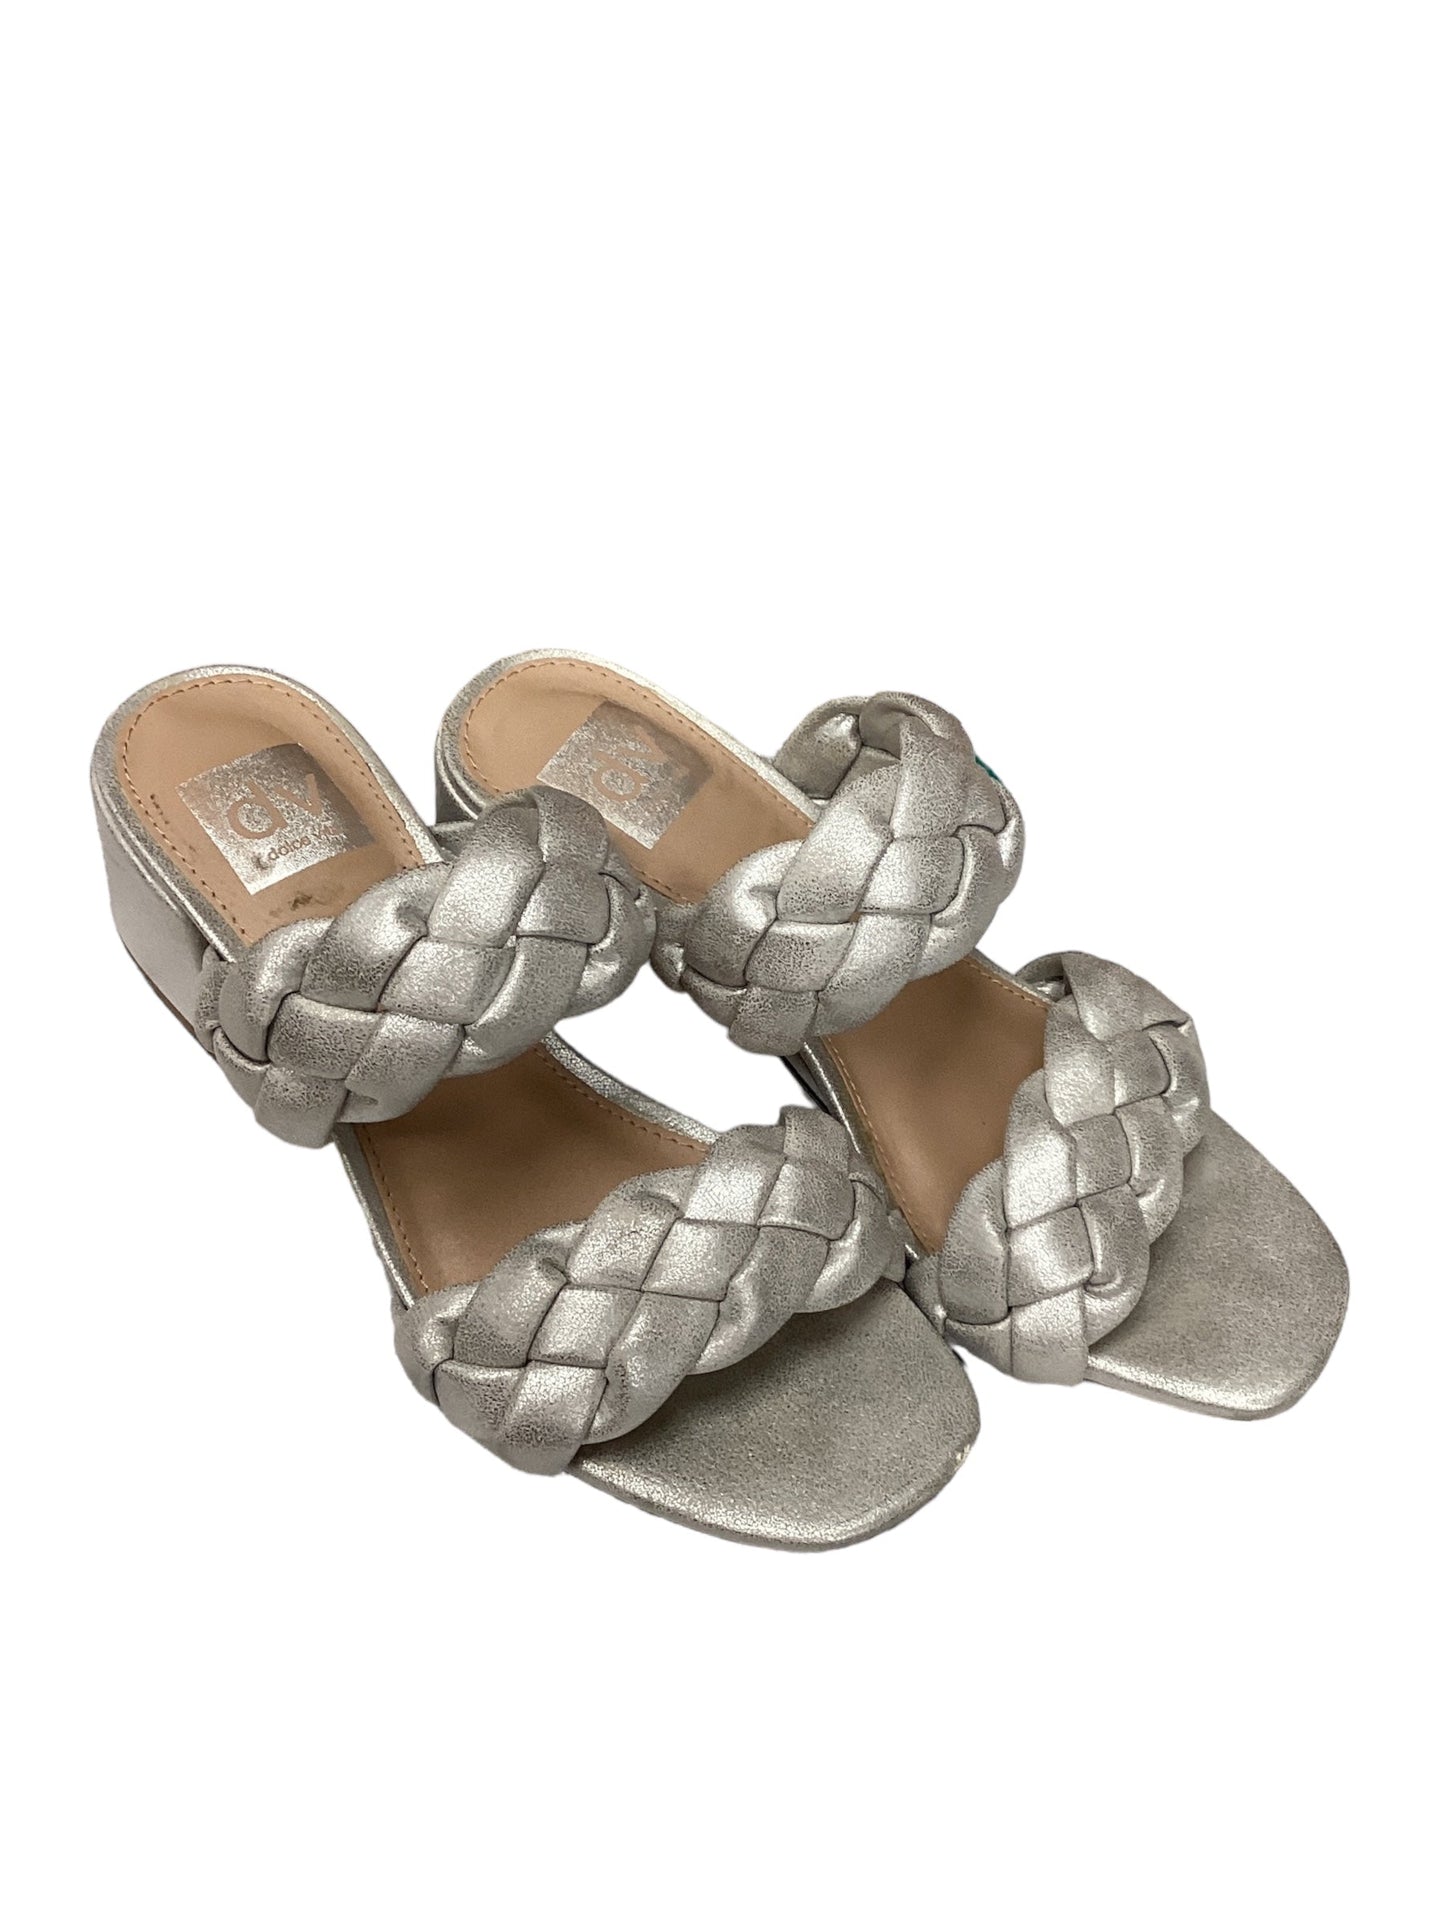 Silver Shoes Heels Block Dolce Vita, Size 9